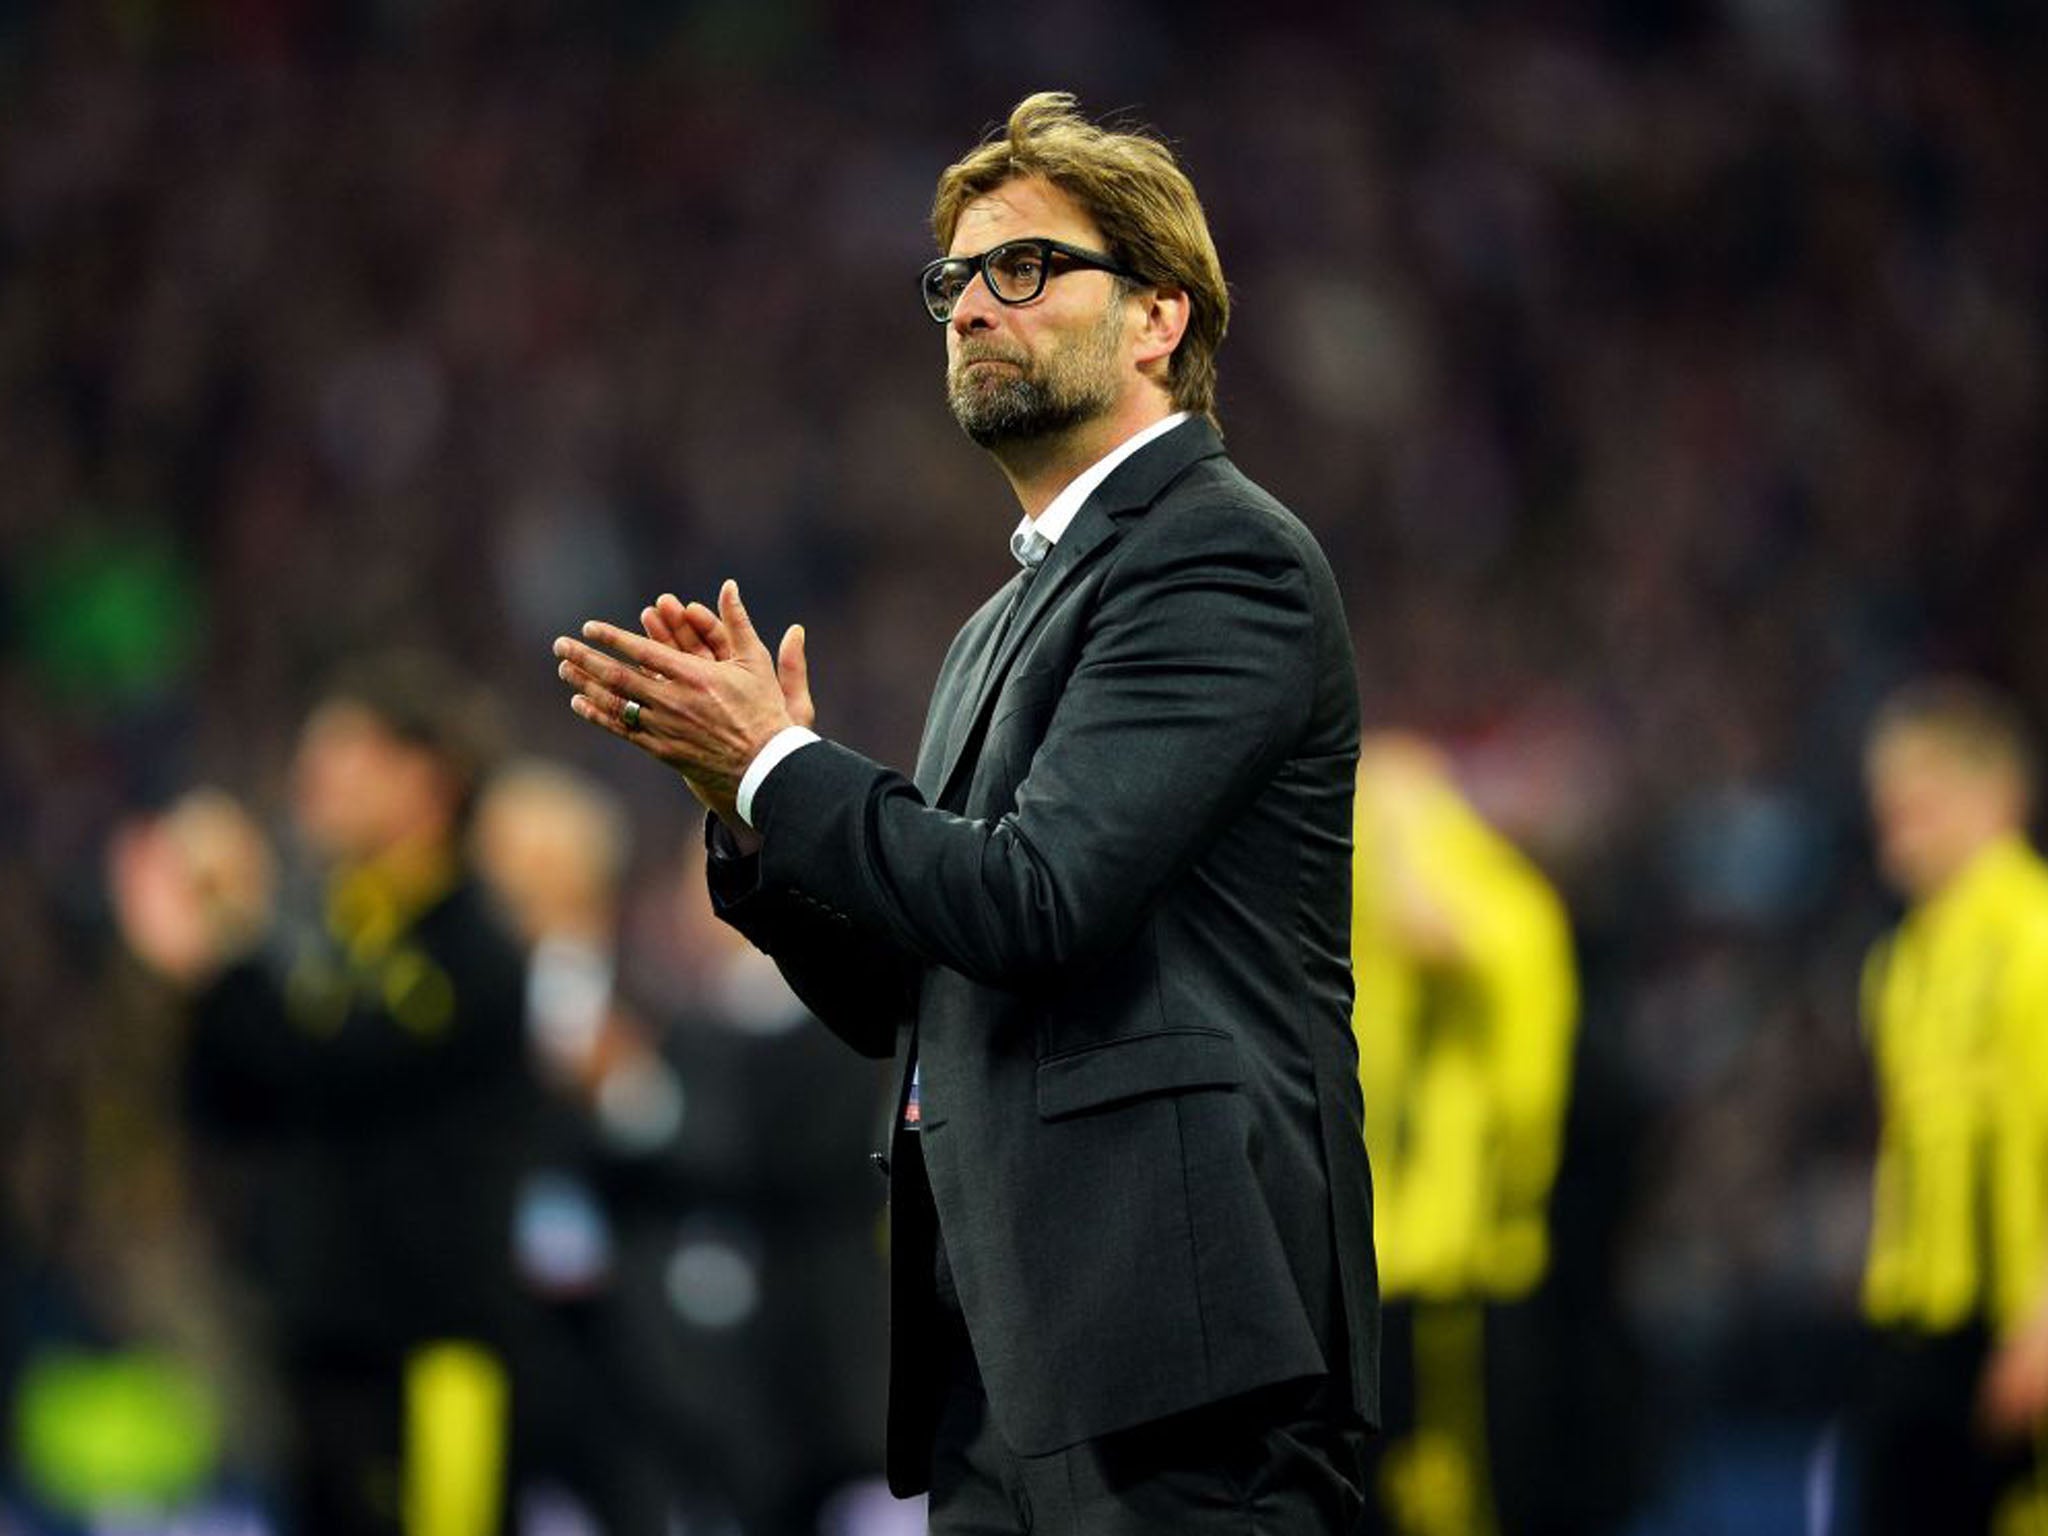 Borussia Dortmund manager Jurgen Klopp congratulates Bayern Munich after the final whistle (Laurence Griffiths/Getty Images)